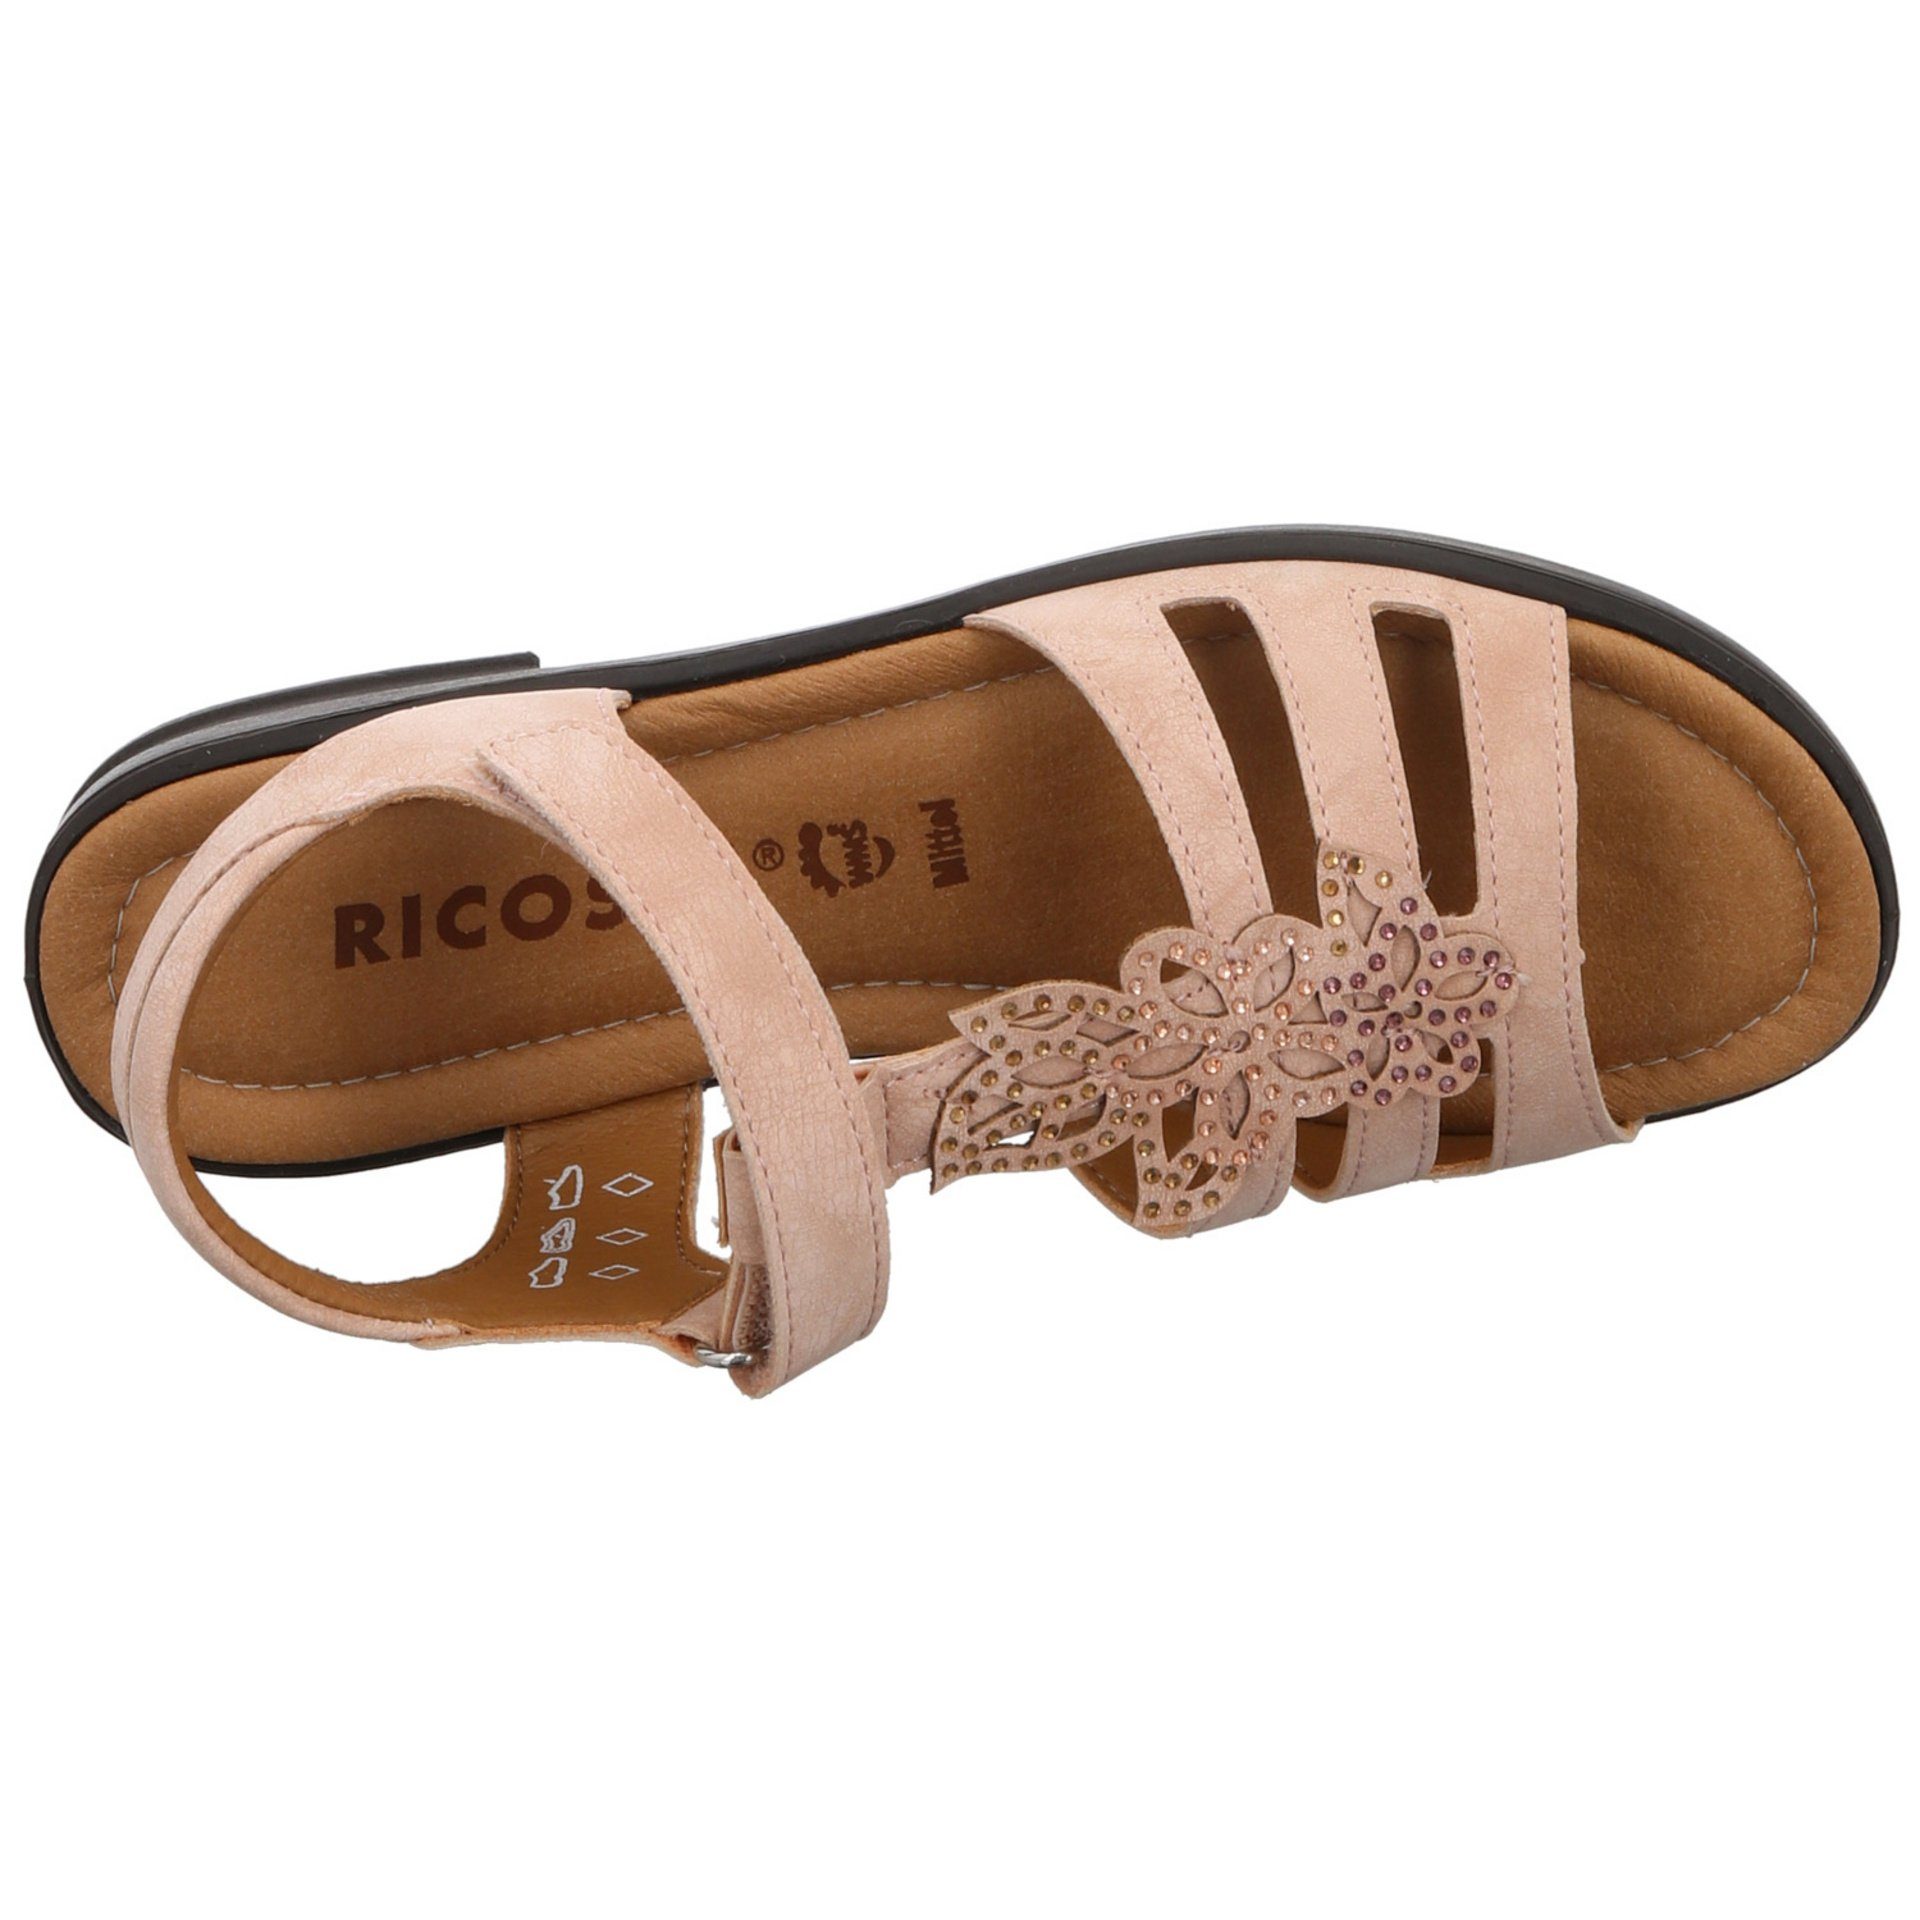 Sandalen Sandale Mädchen beige hell Sandale Synthetik Ricosta Schuhe Kinderschuhe Amira